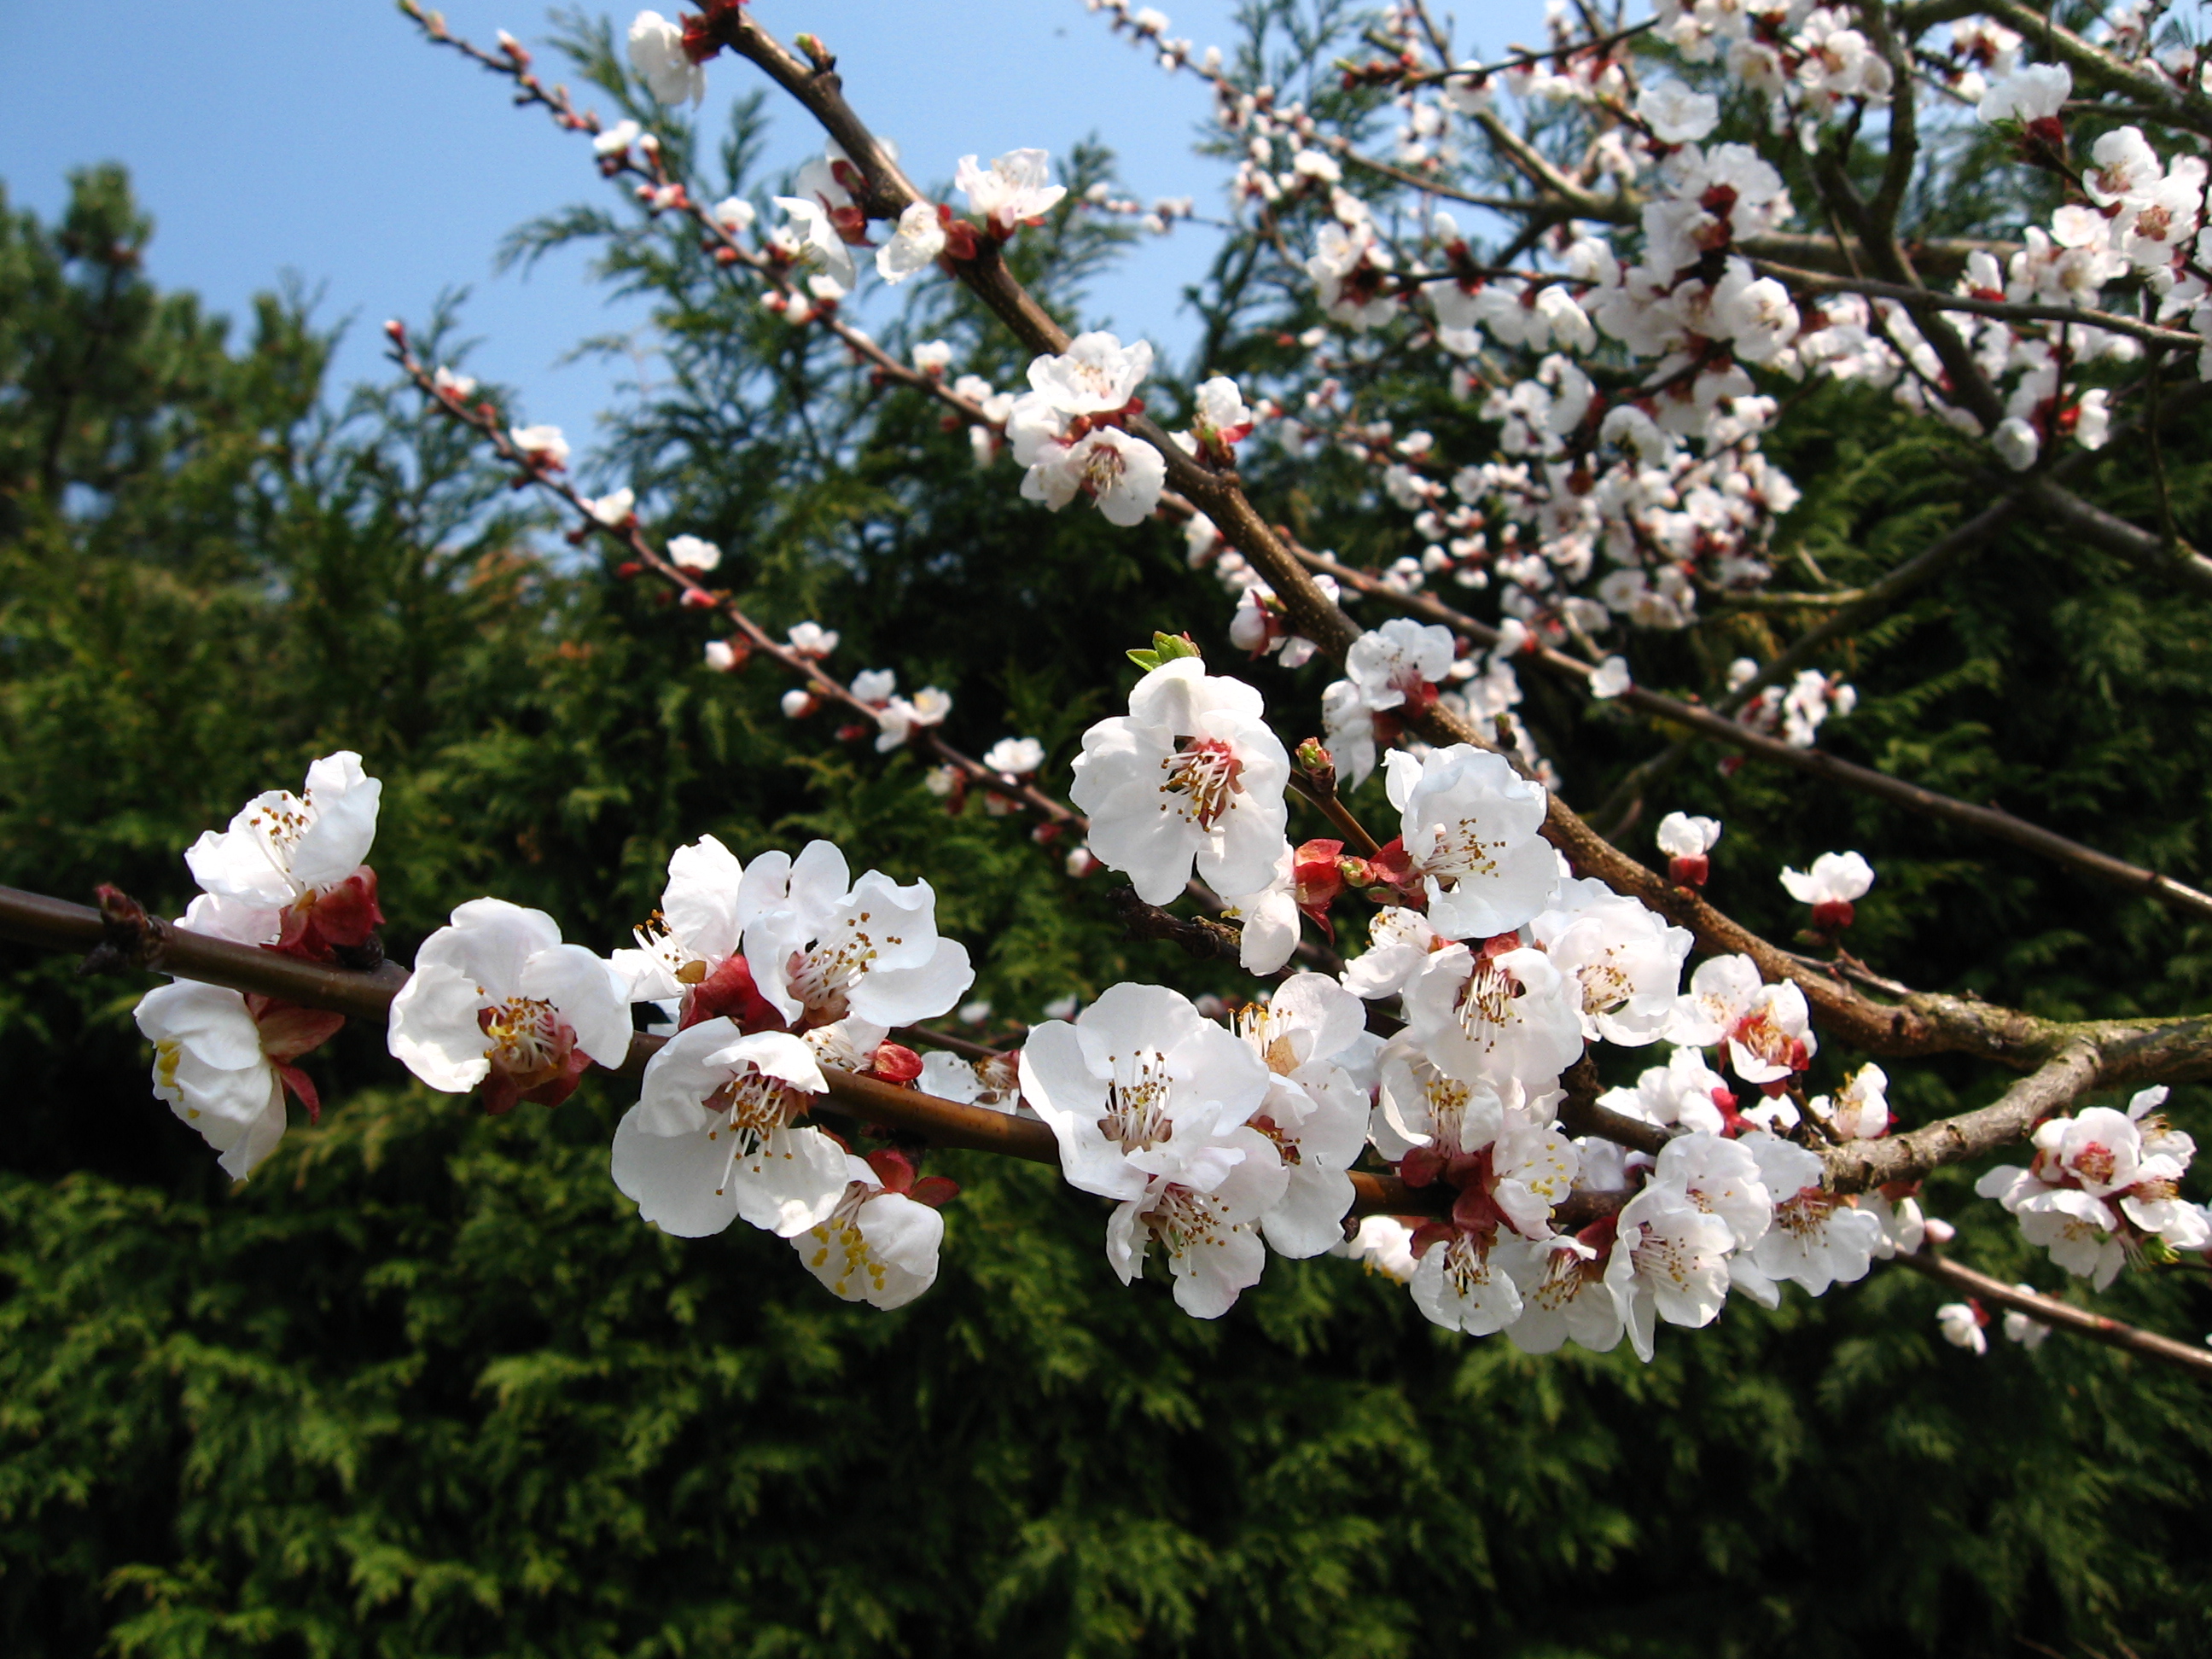 File:Apple tree flowers .jpg - Wikimedia Commons